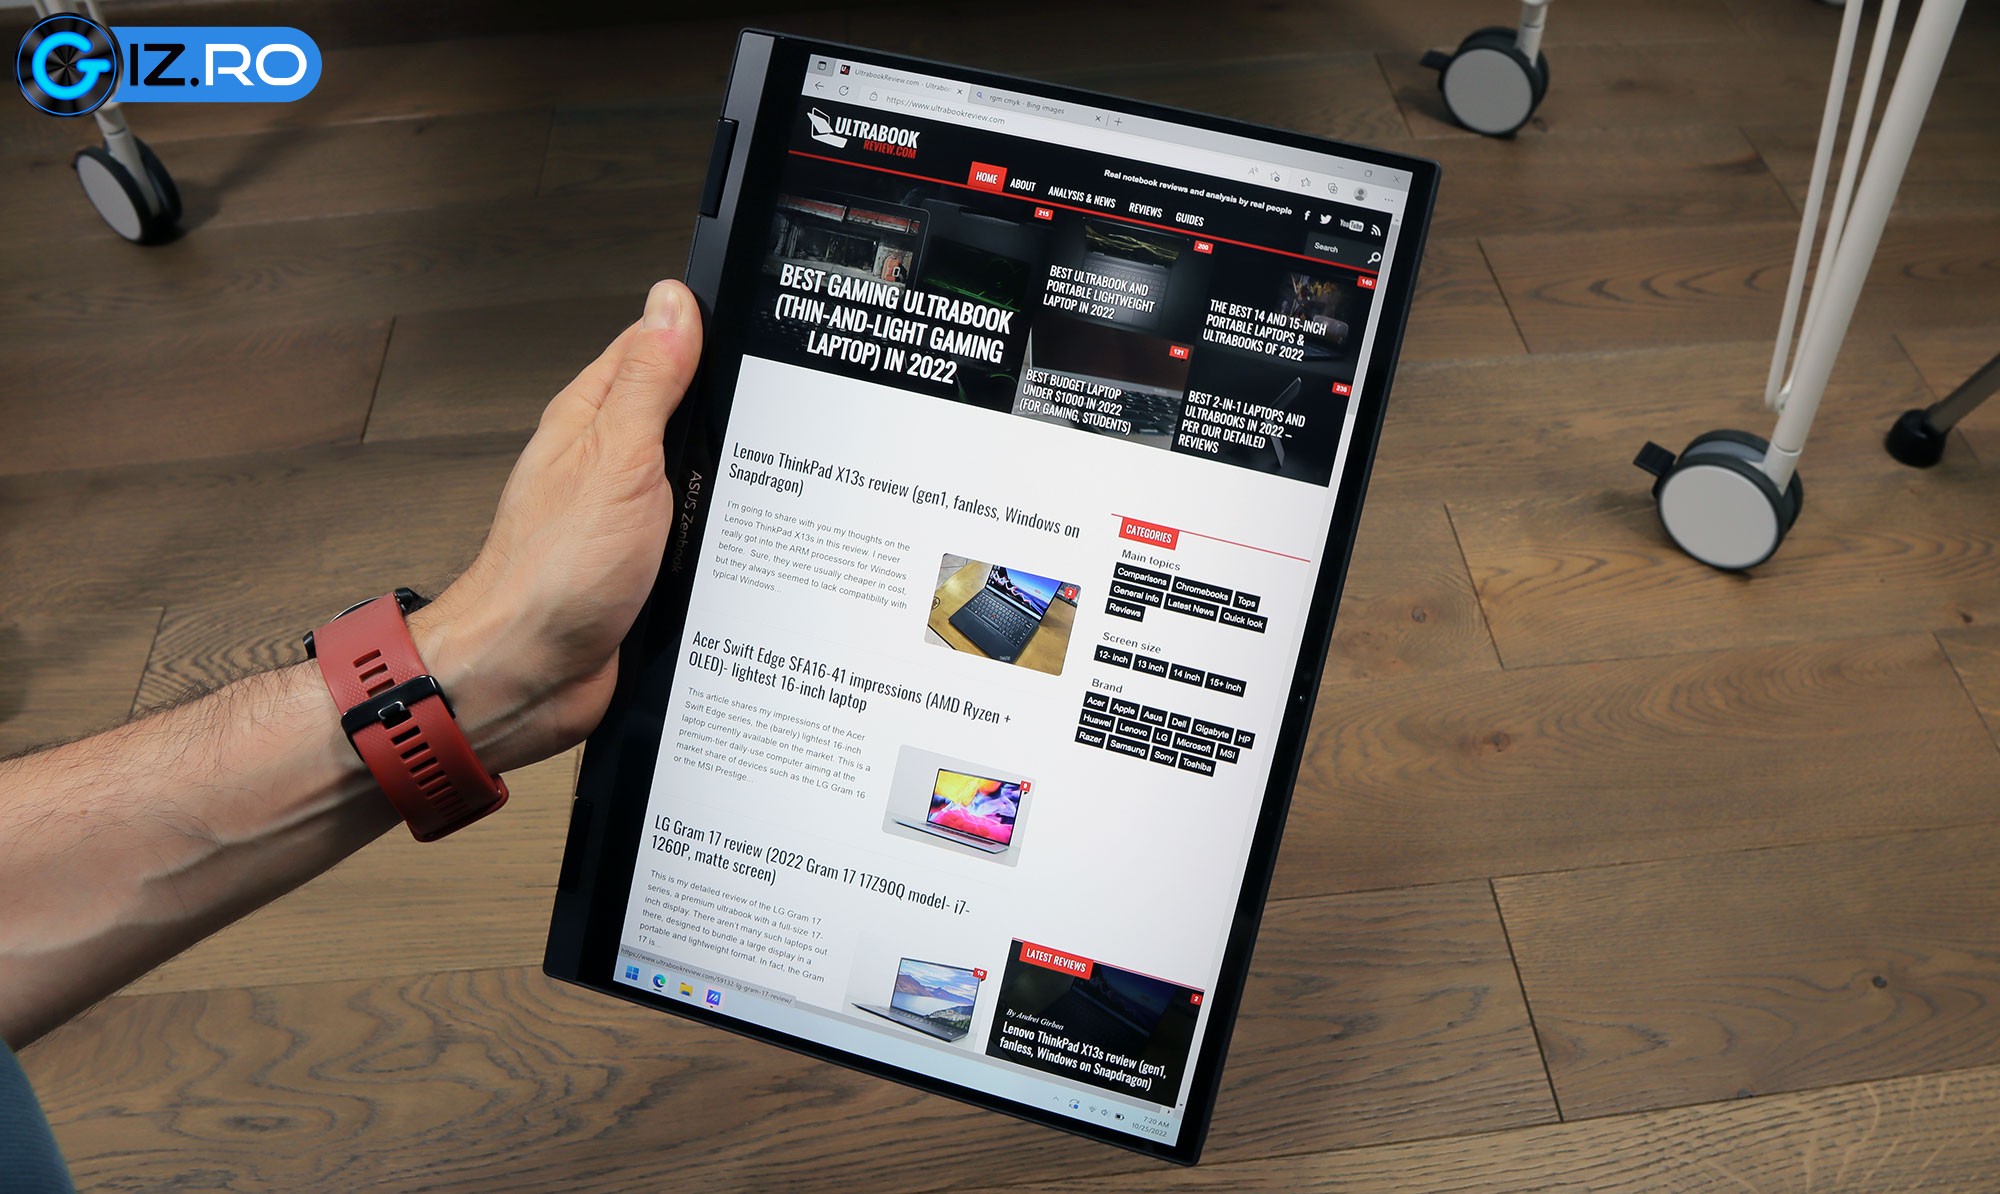 asus zenbook s13 flip modes tablet